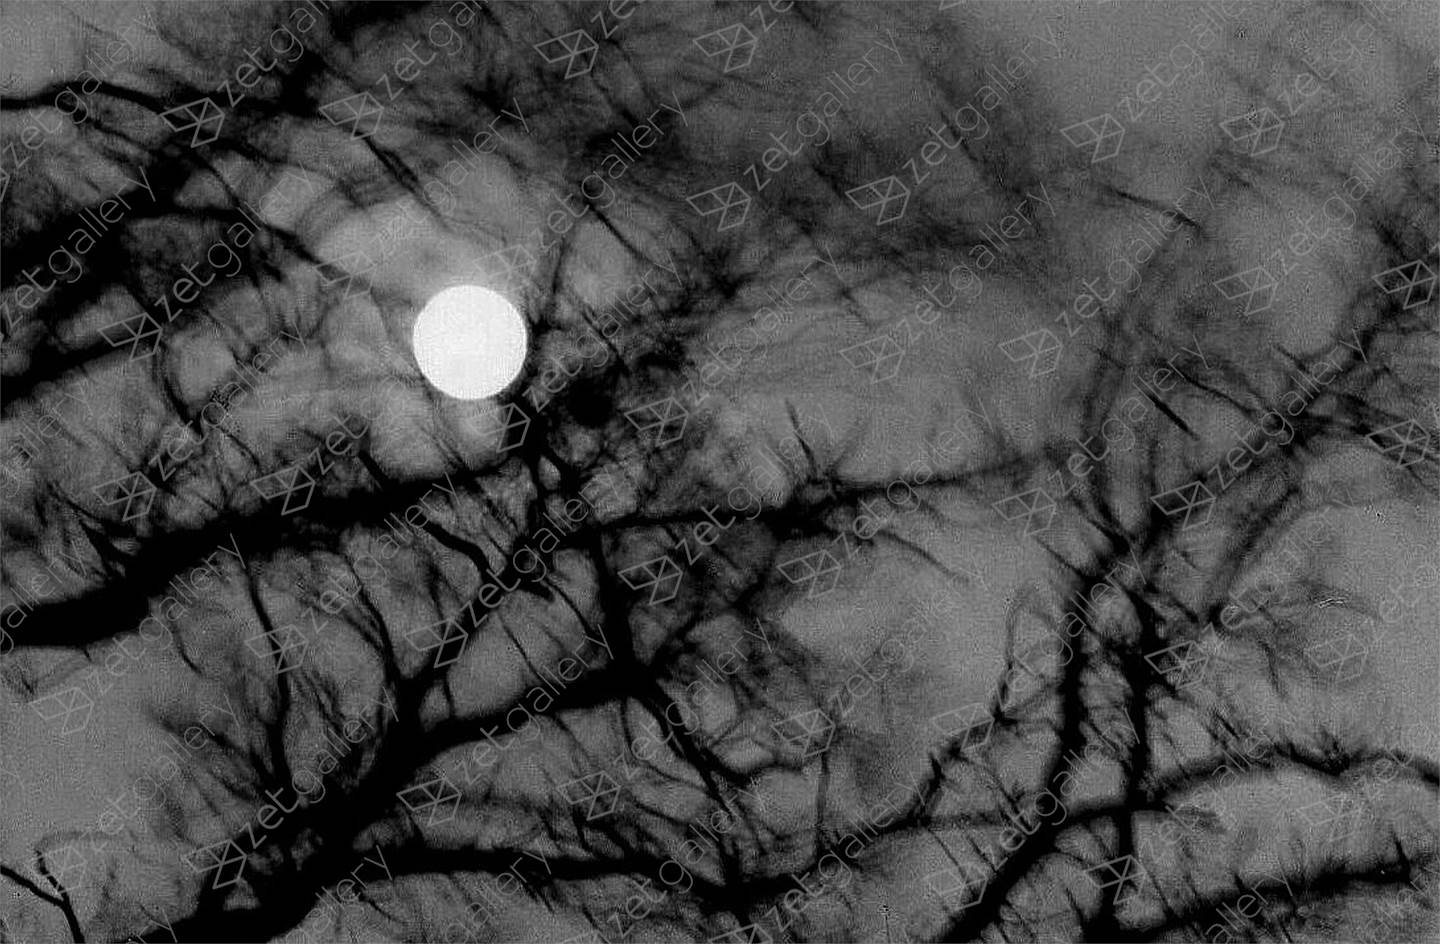 Full-Moon-Night, original N&B Analogique La photographie par Heinz Baade